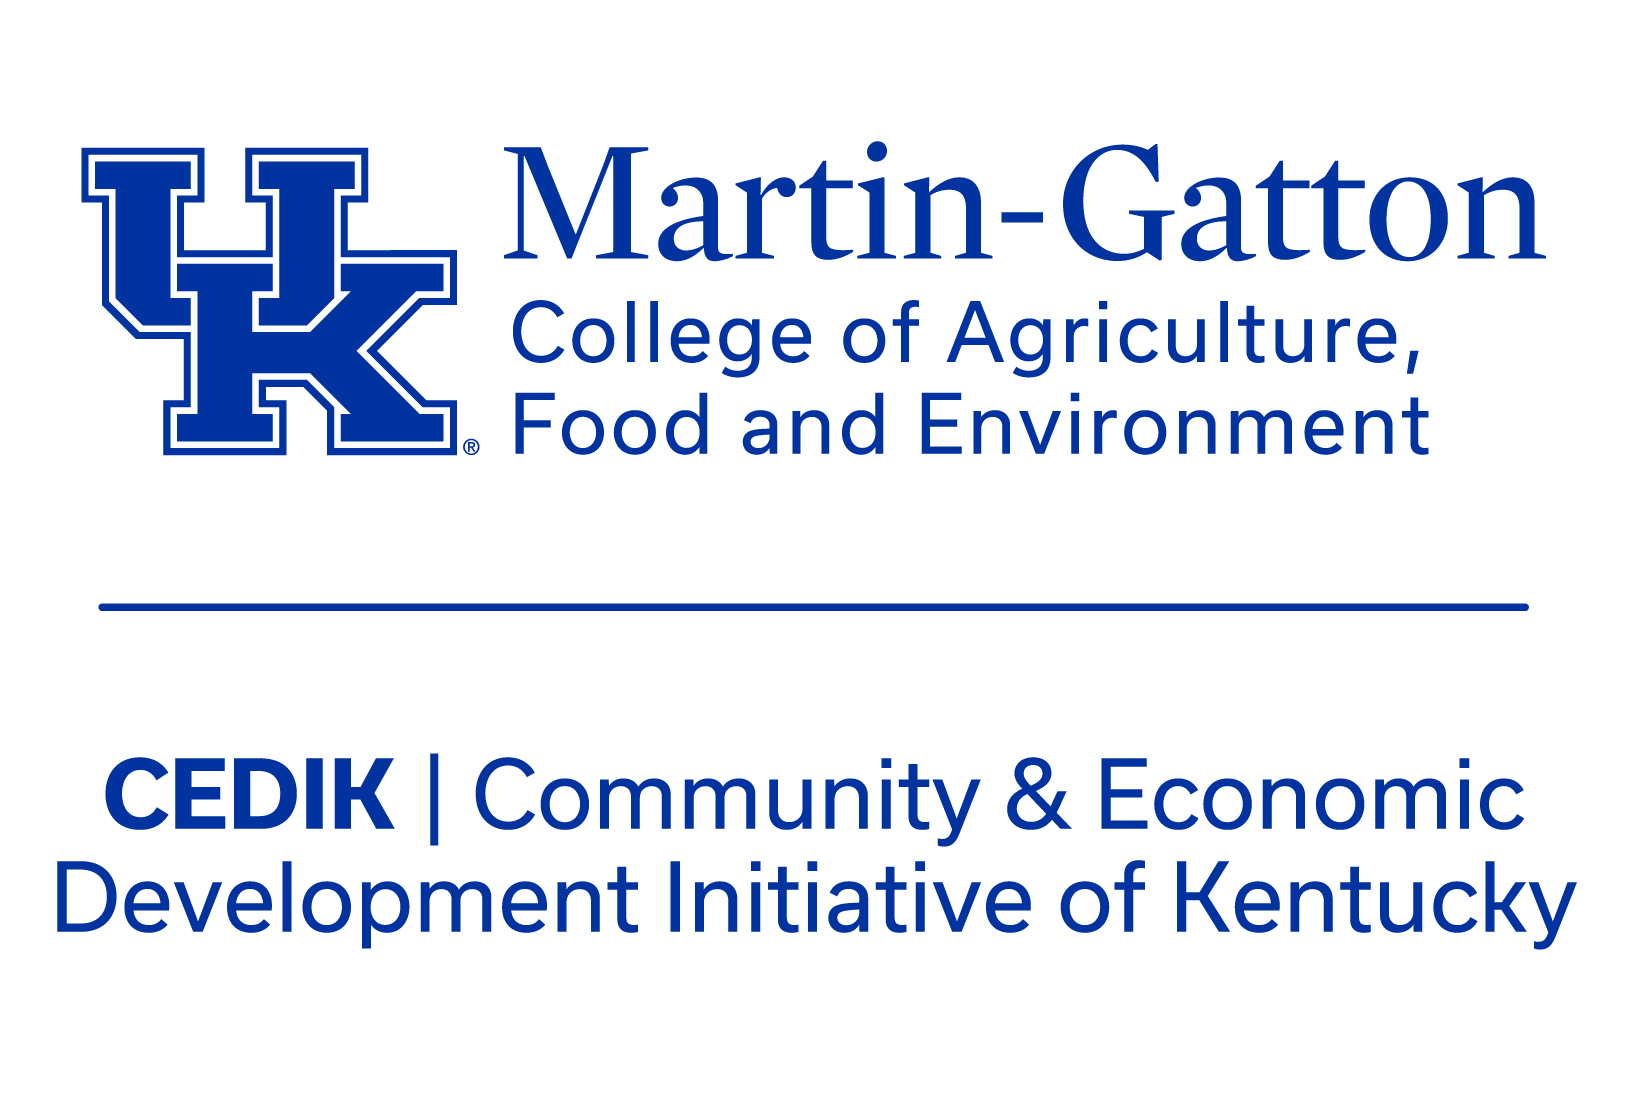 Community & Economic Development Initiative of Kentucky